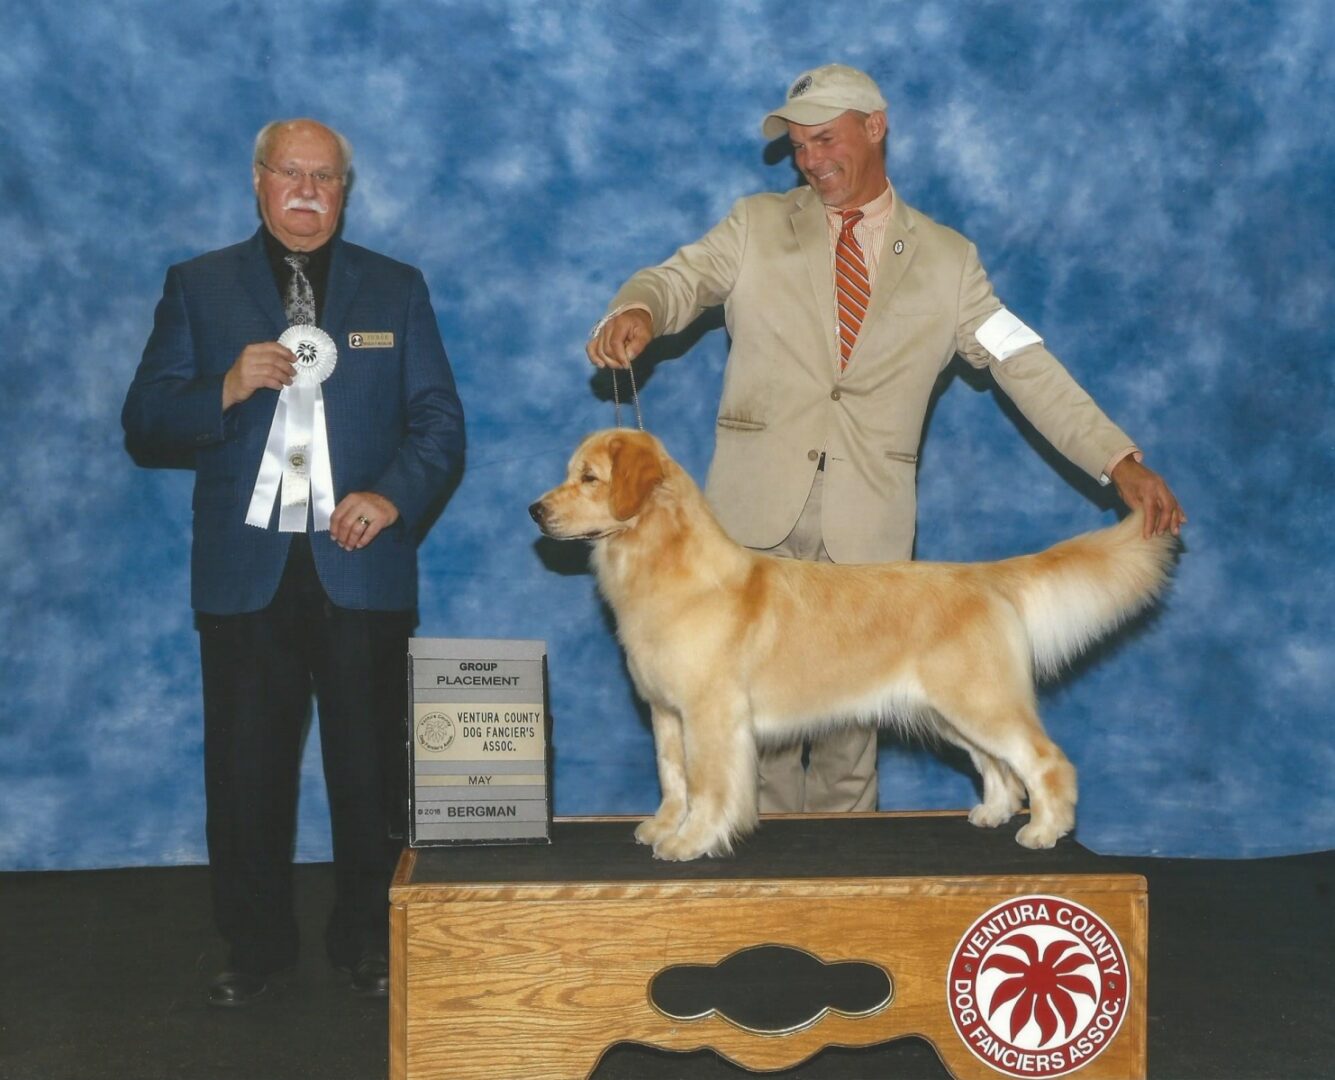 Two men standing next to a golden retriever at a show.